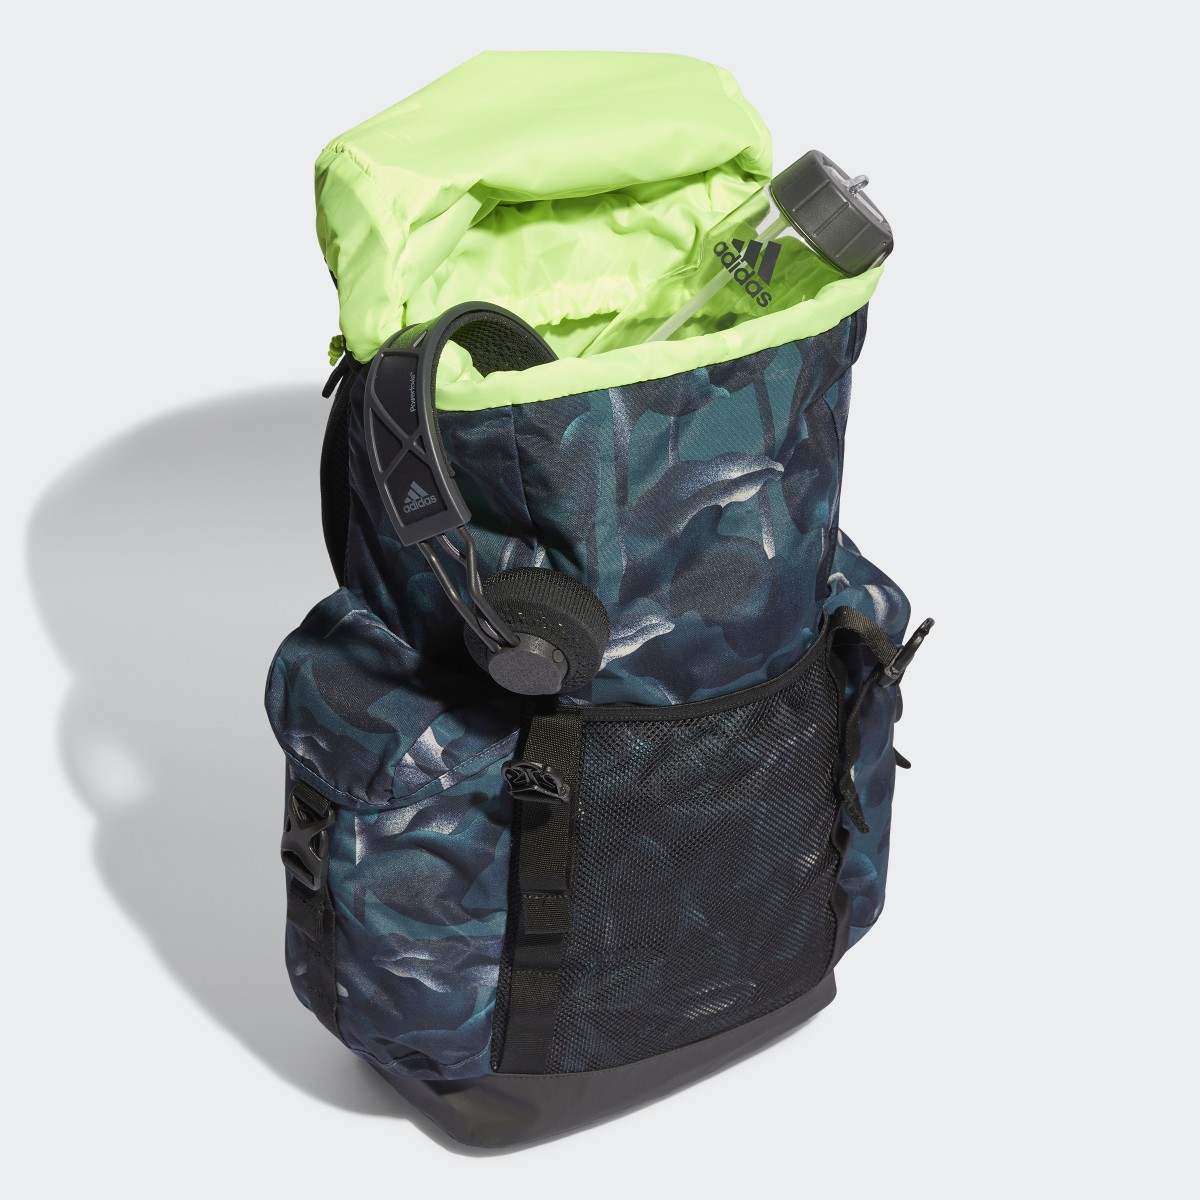 Adidas Xplorer Backpack. 5